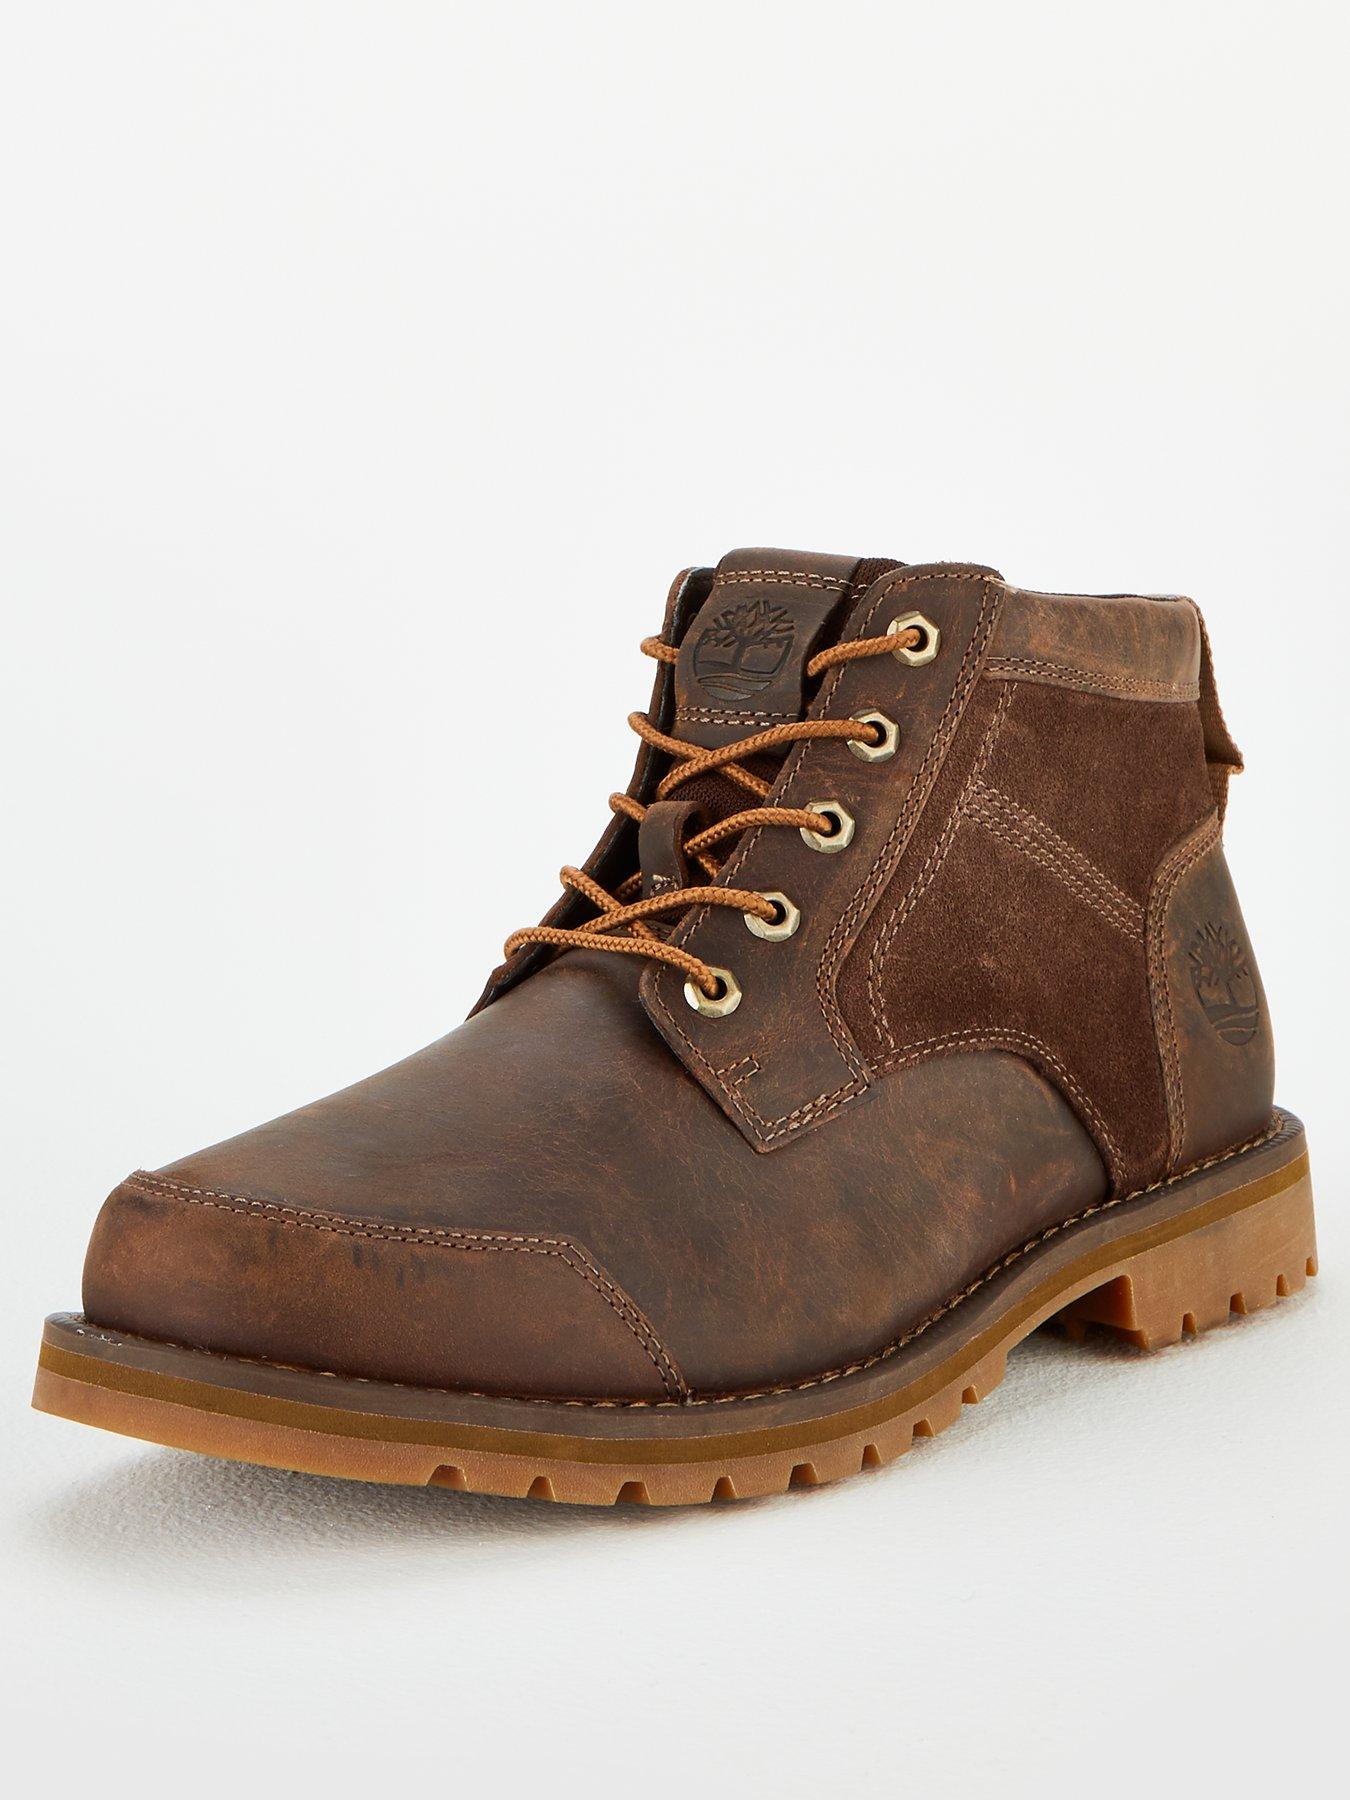 timberland larchmont chukka boots brown